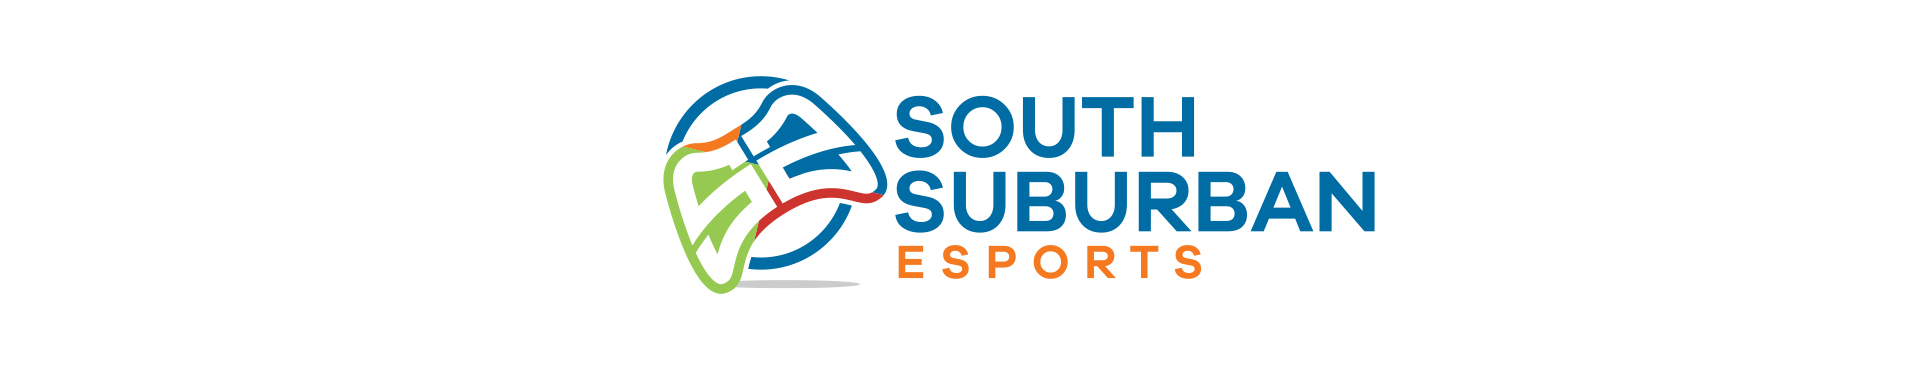 South Suburban eSports Logo